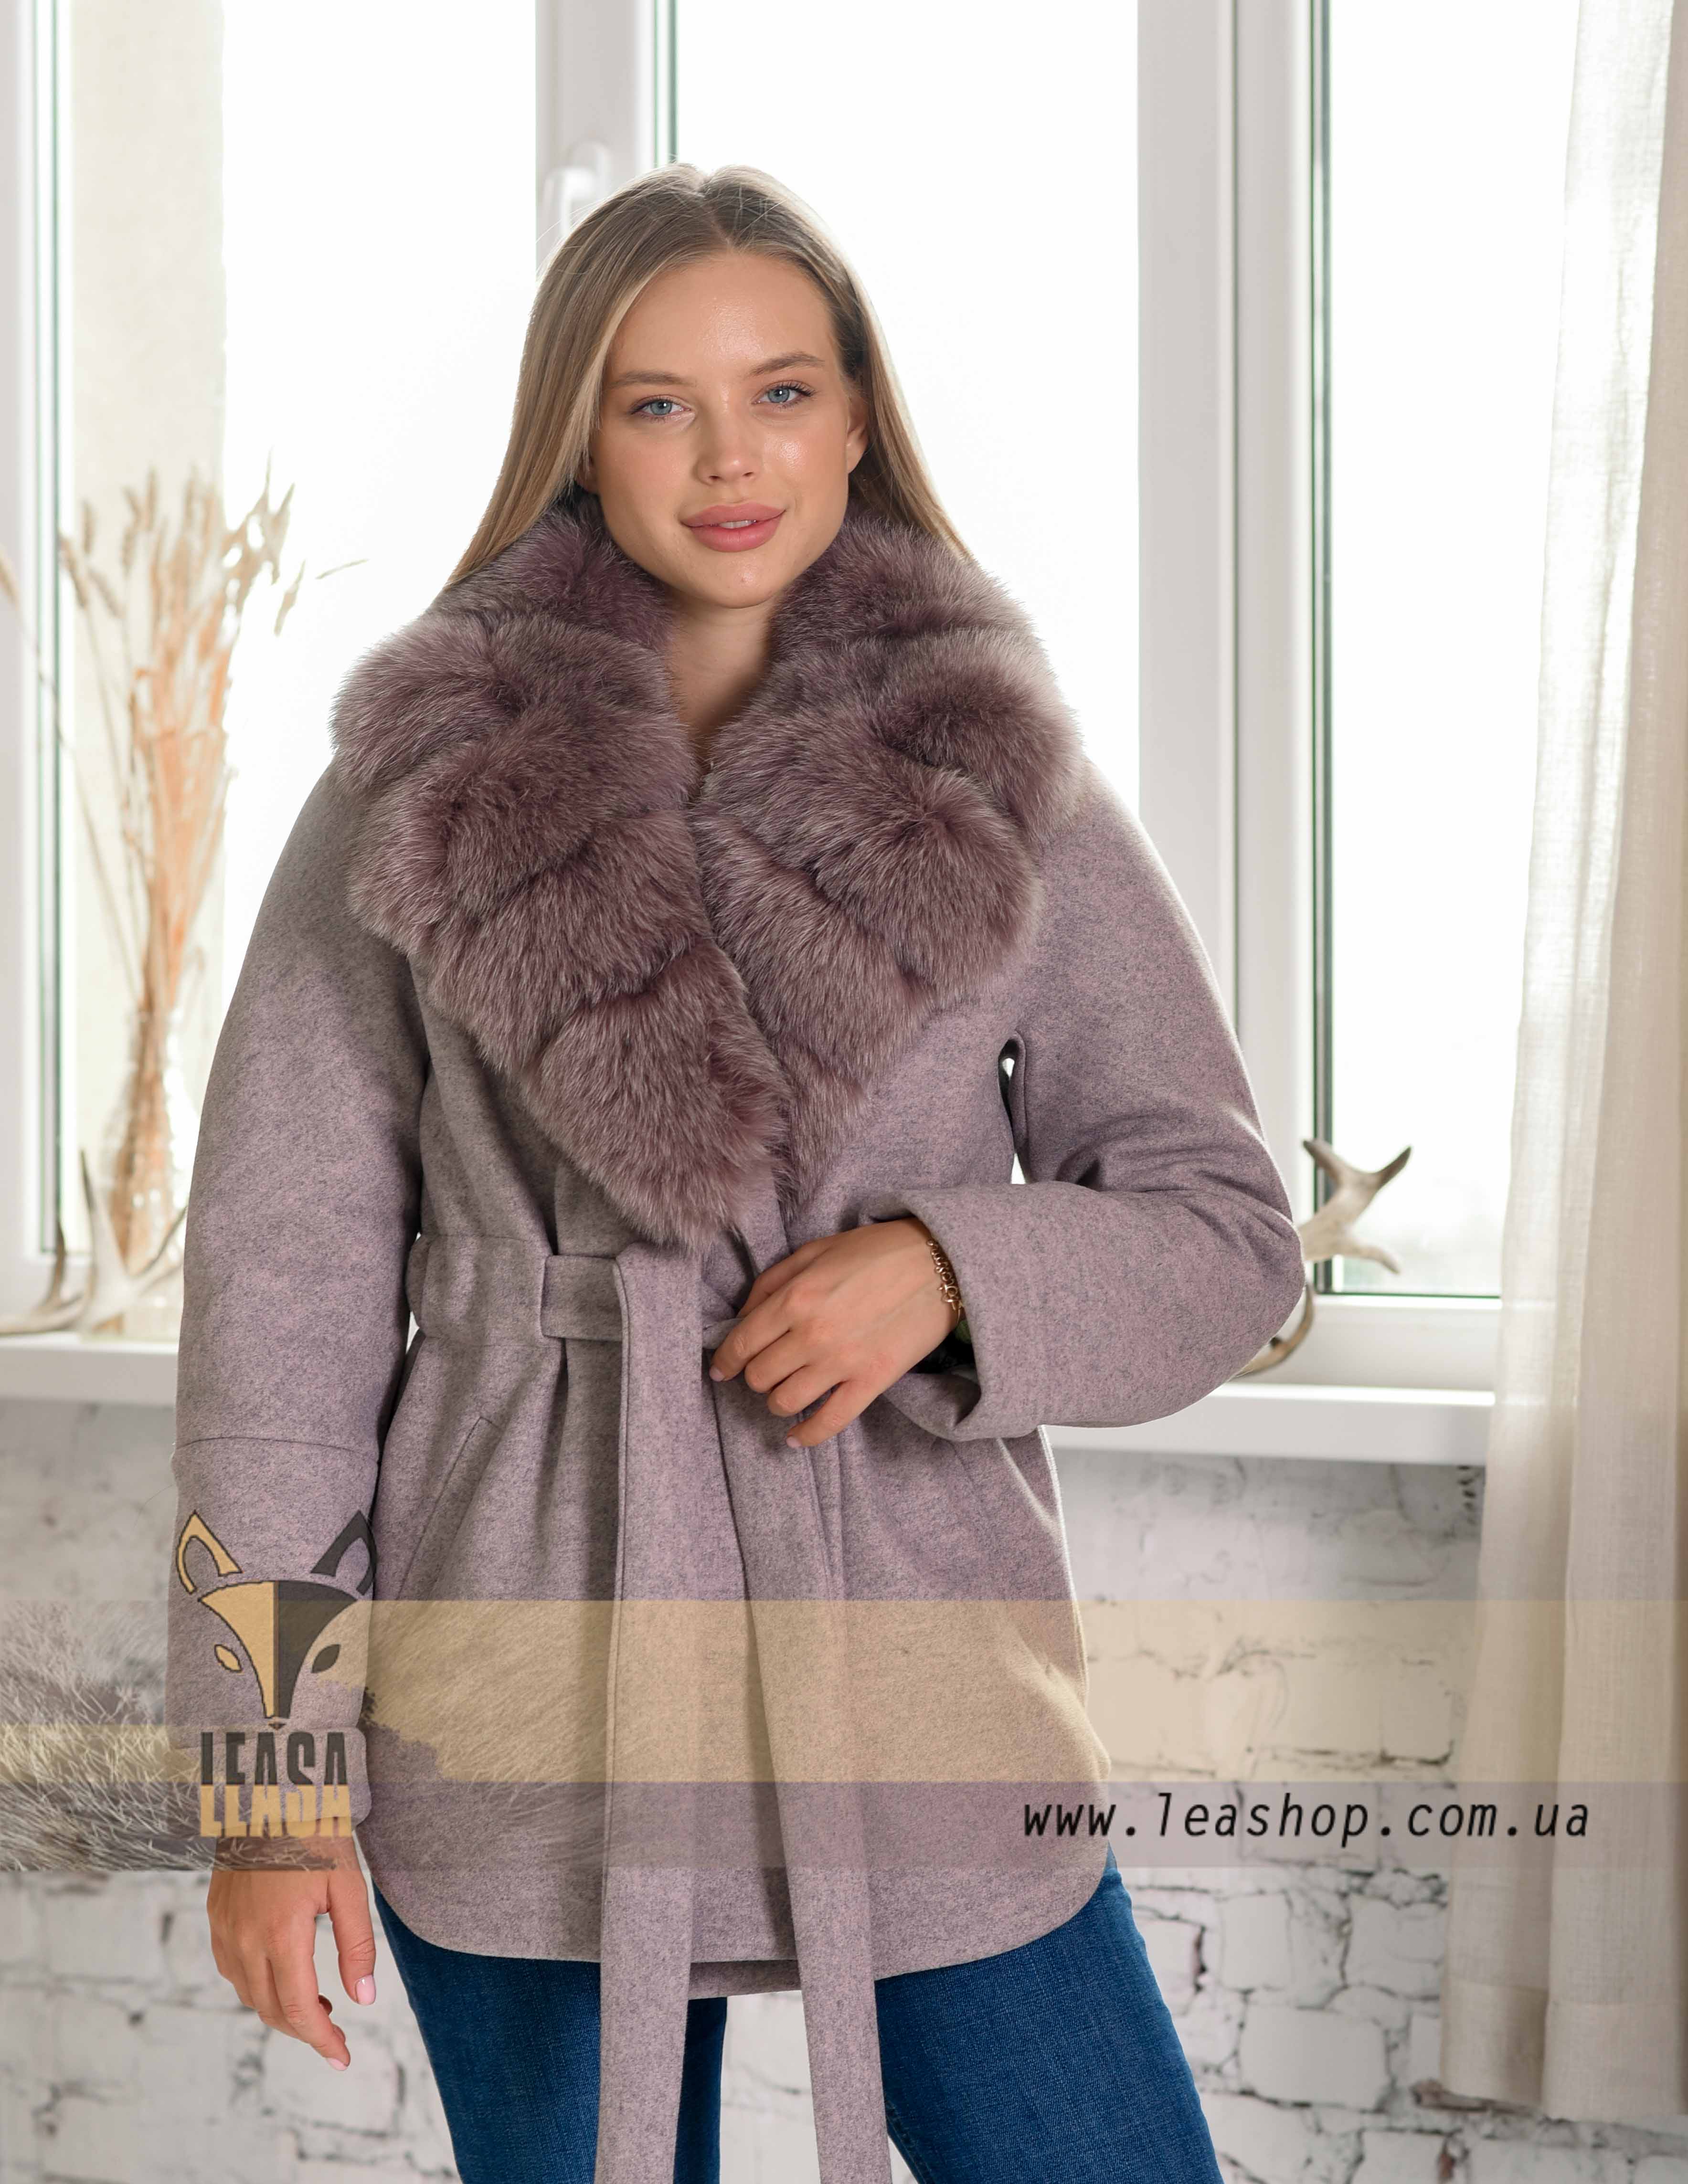 Women's powder colour coat with fur collar